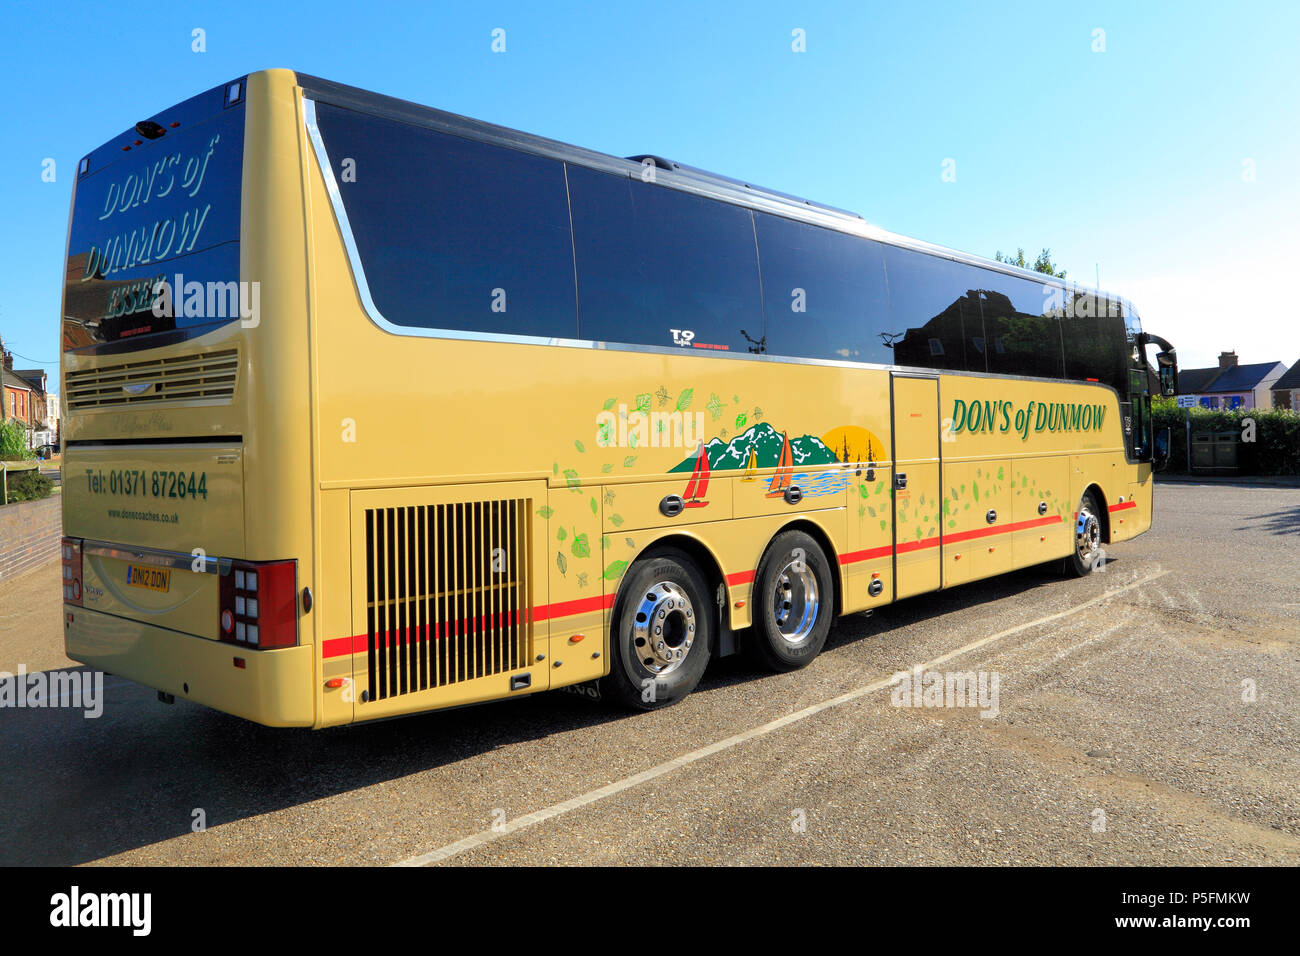 Don's of Dunmow, coach, bus, transport, England, UK Stock Photo